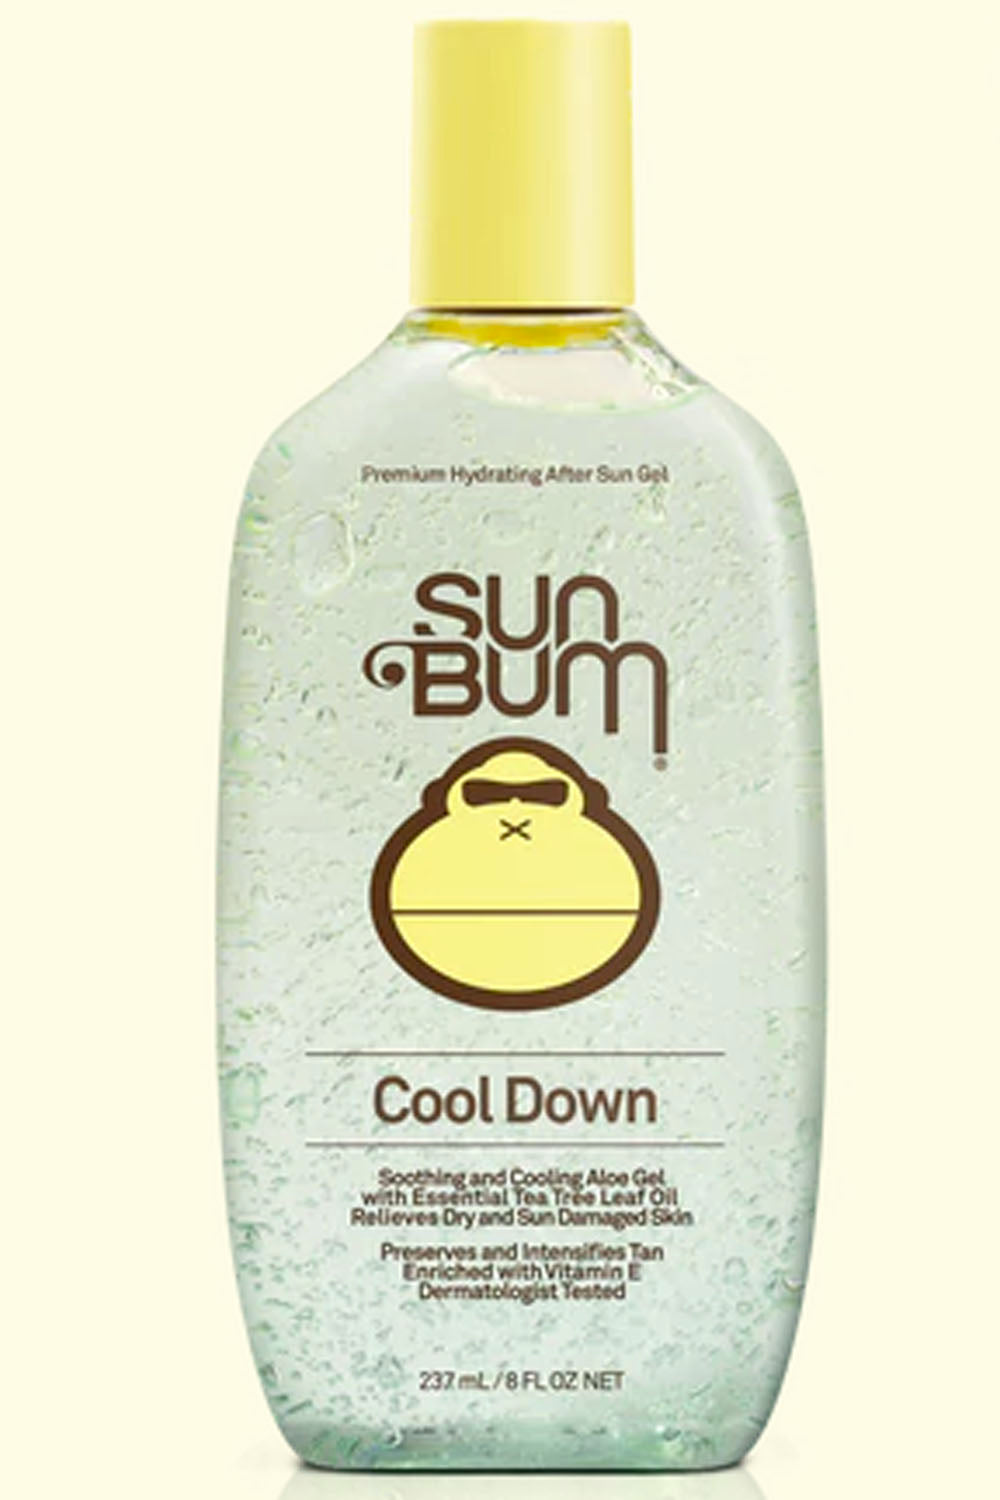 Sun Bum After Sun Aloe Gel